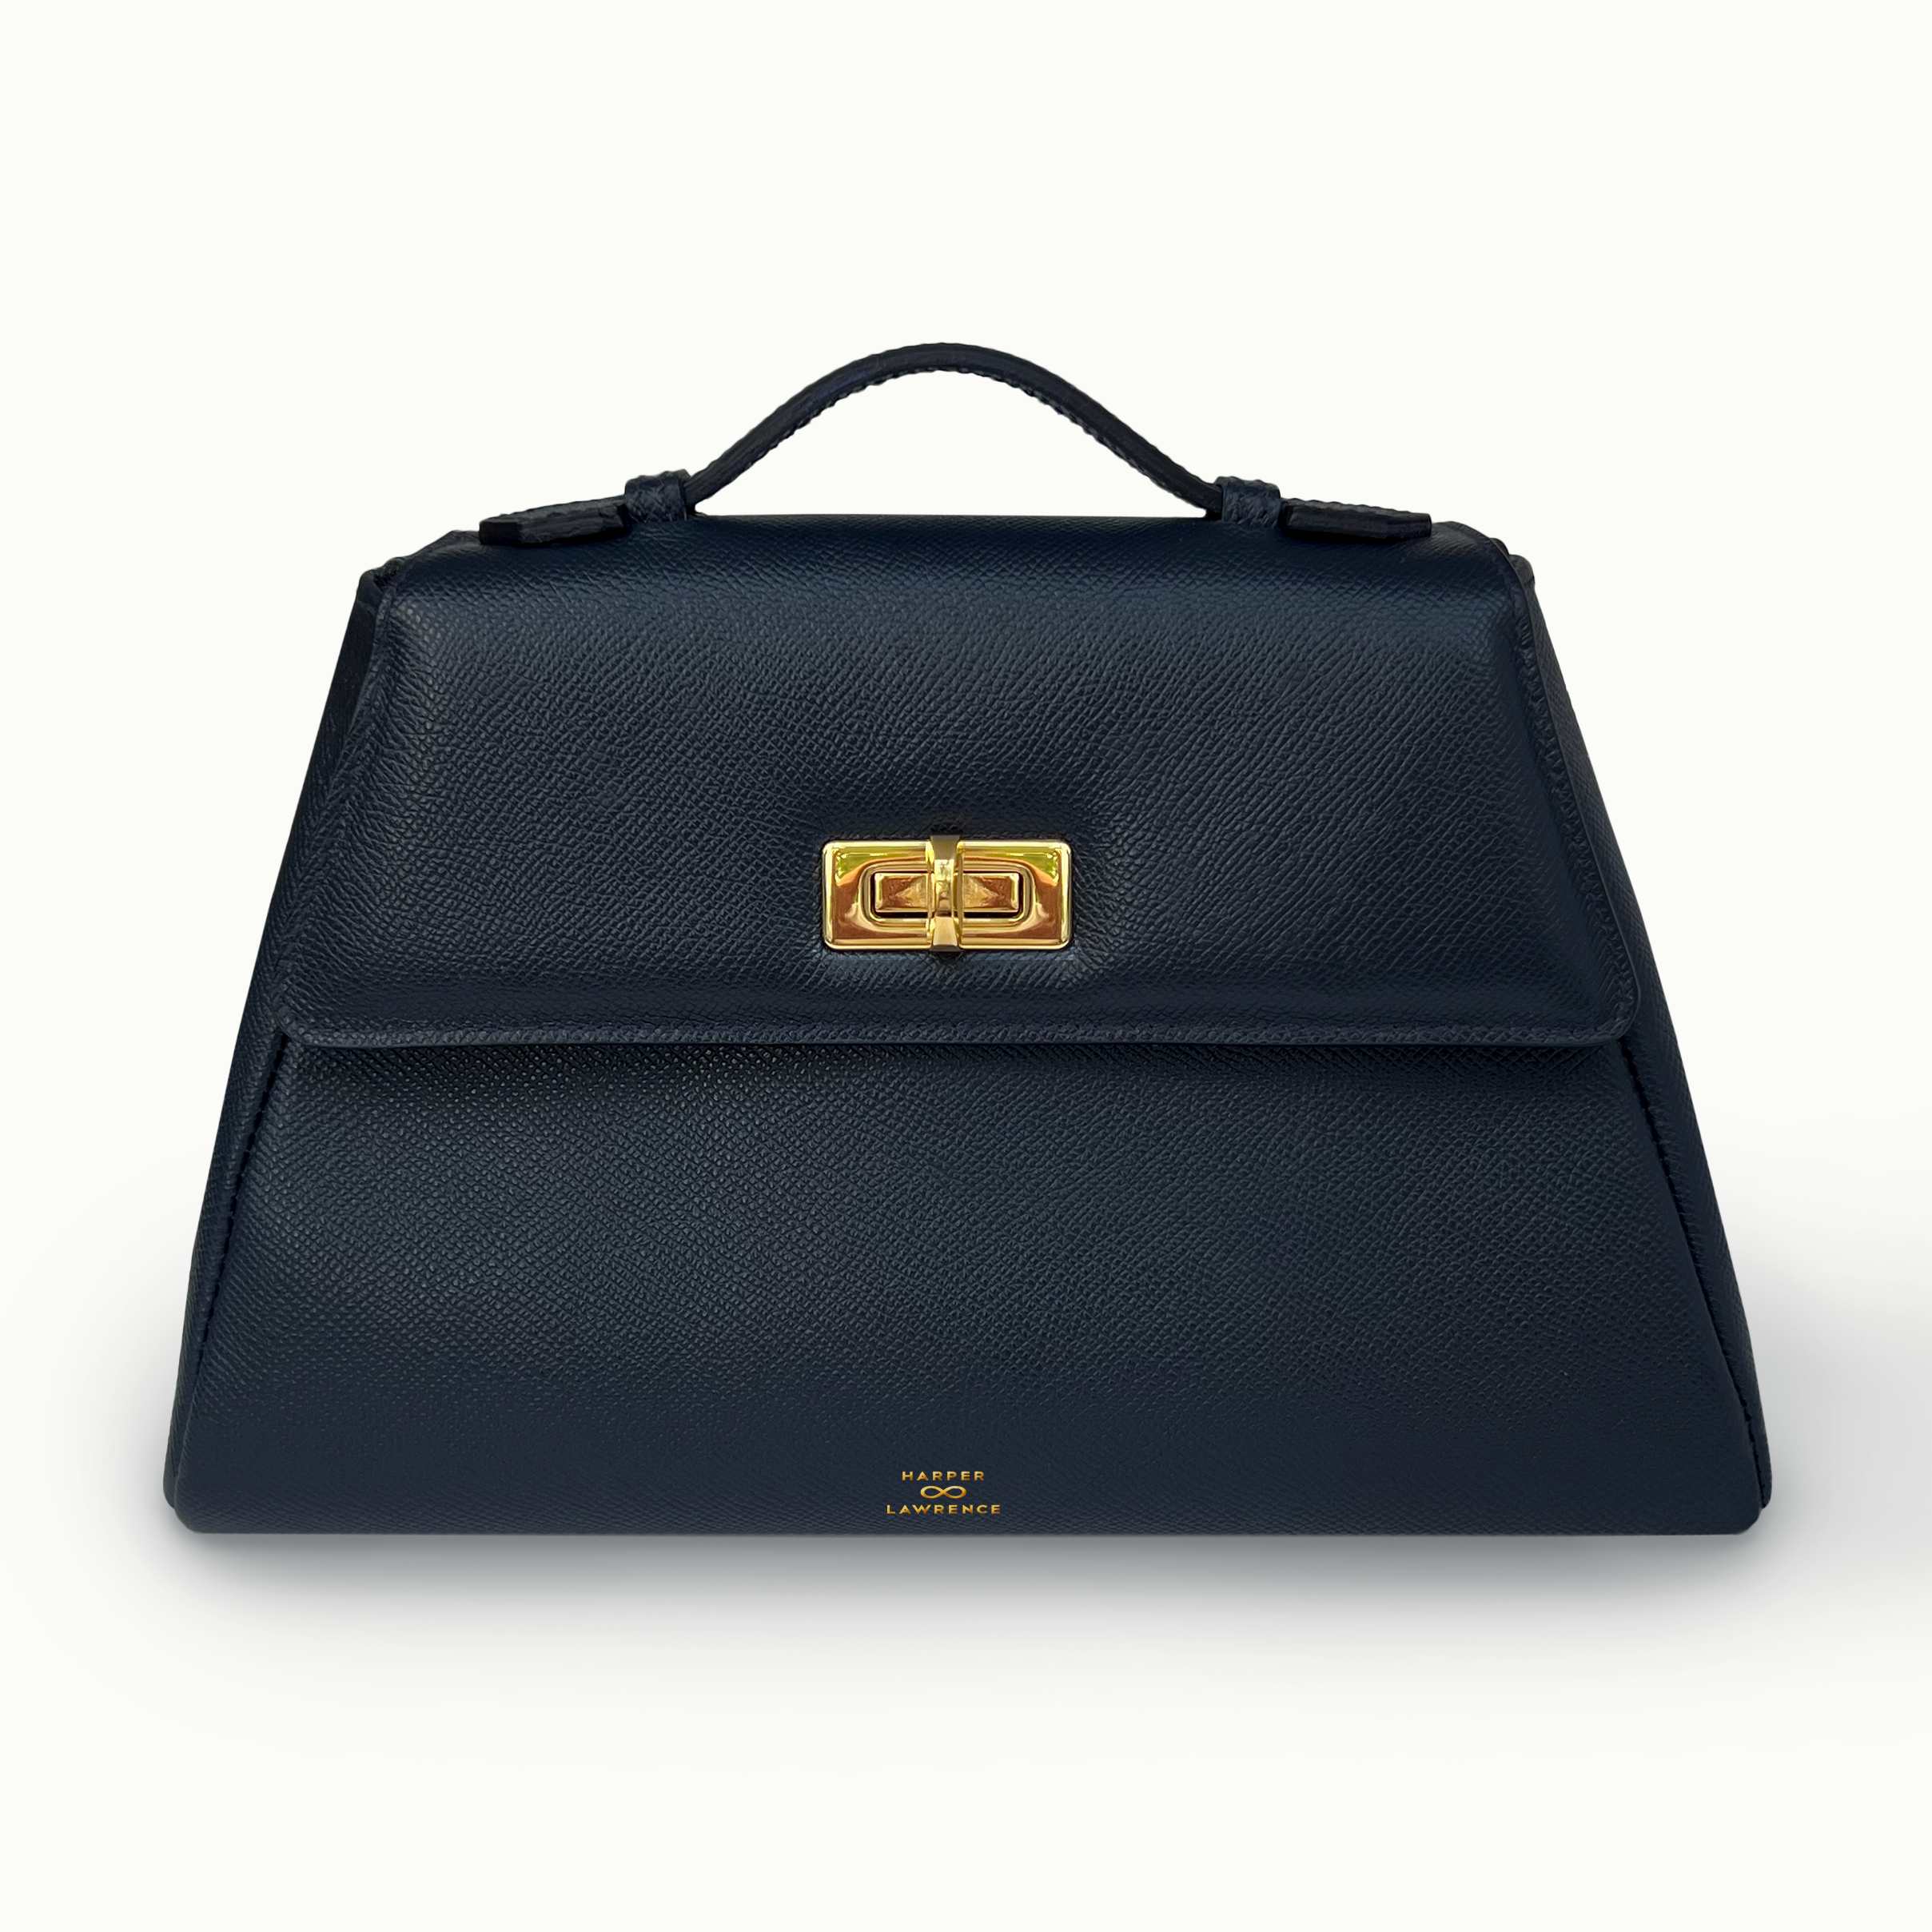 Francesca's Collections 100% Leather Handbags | Mercari